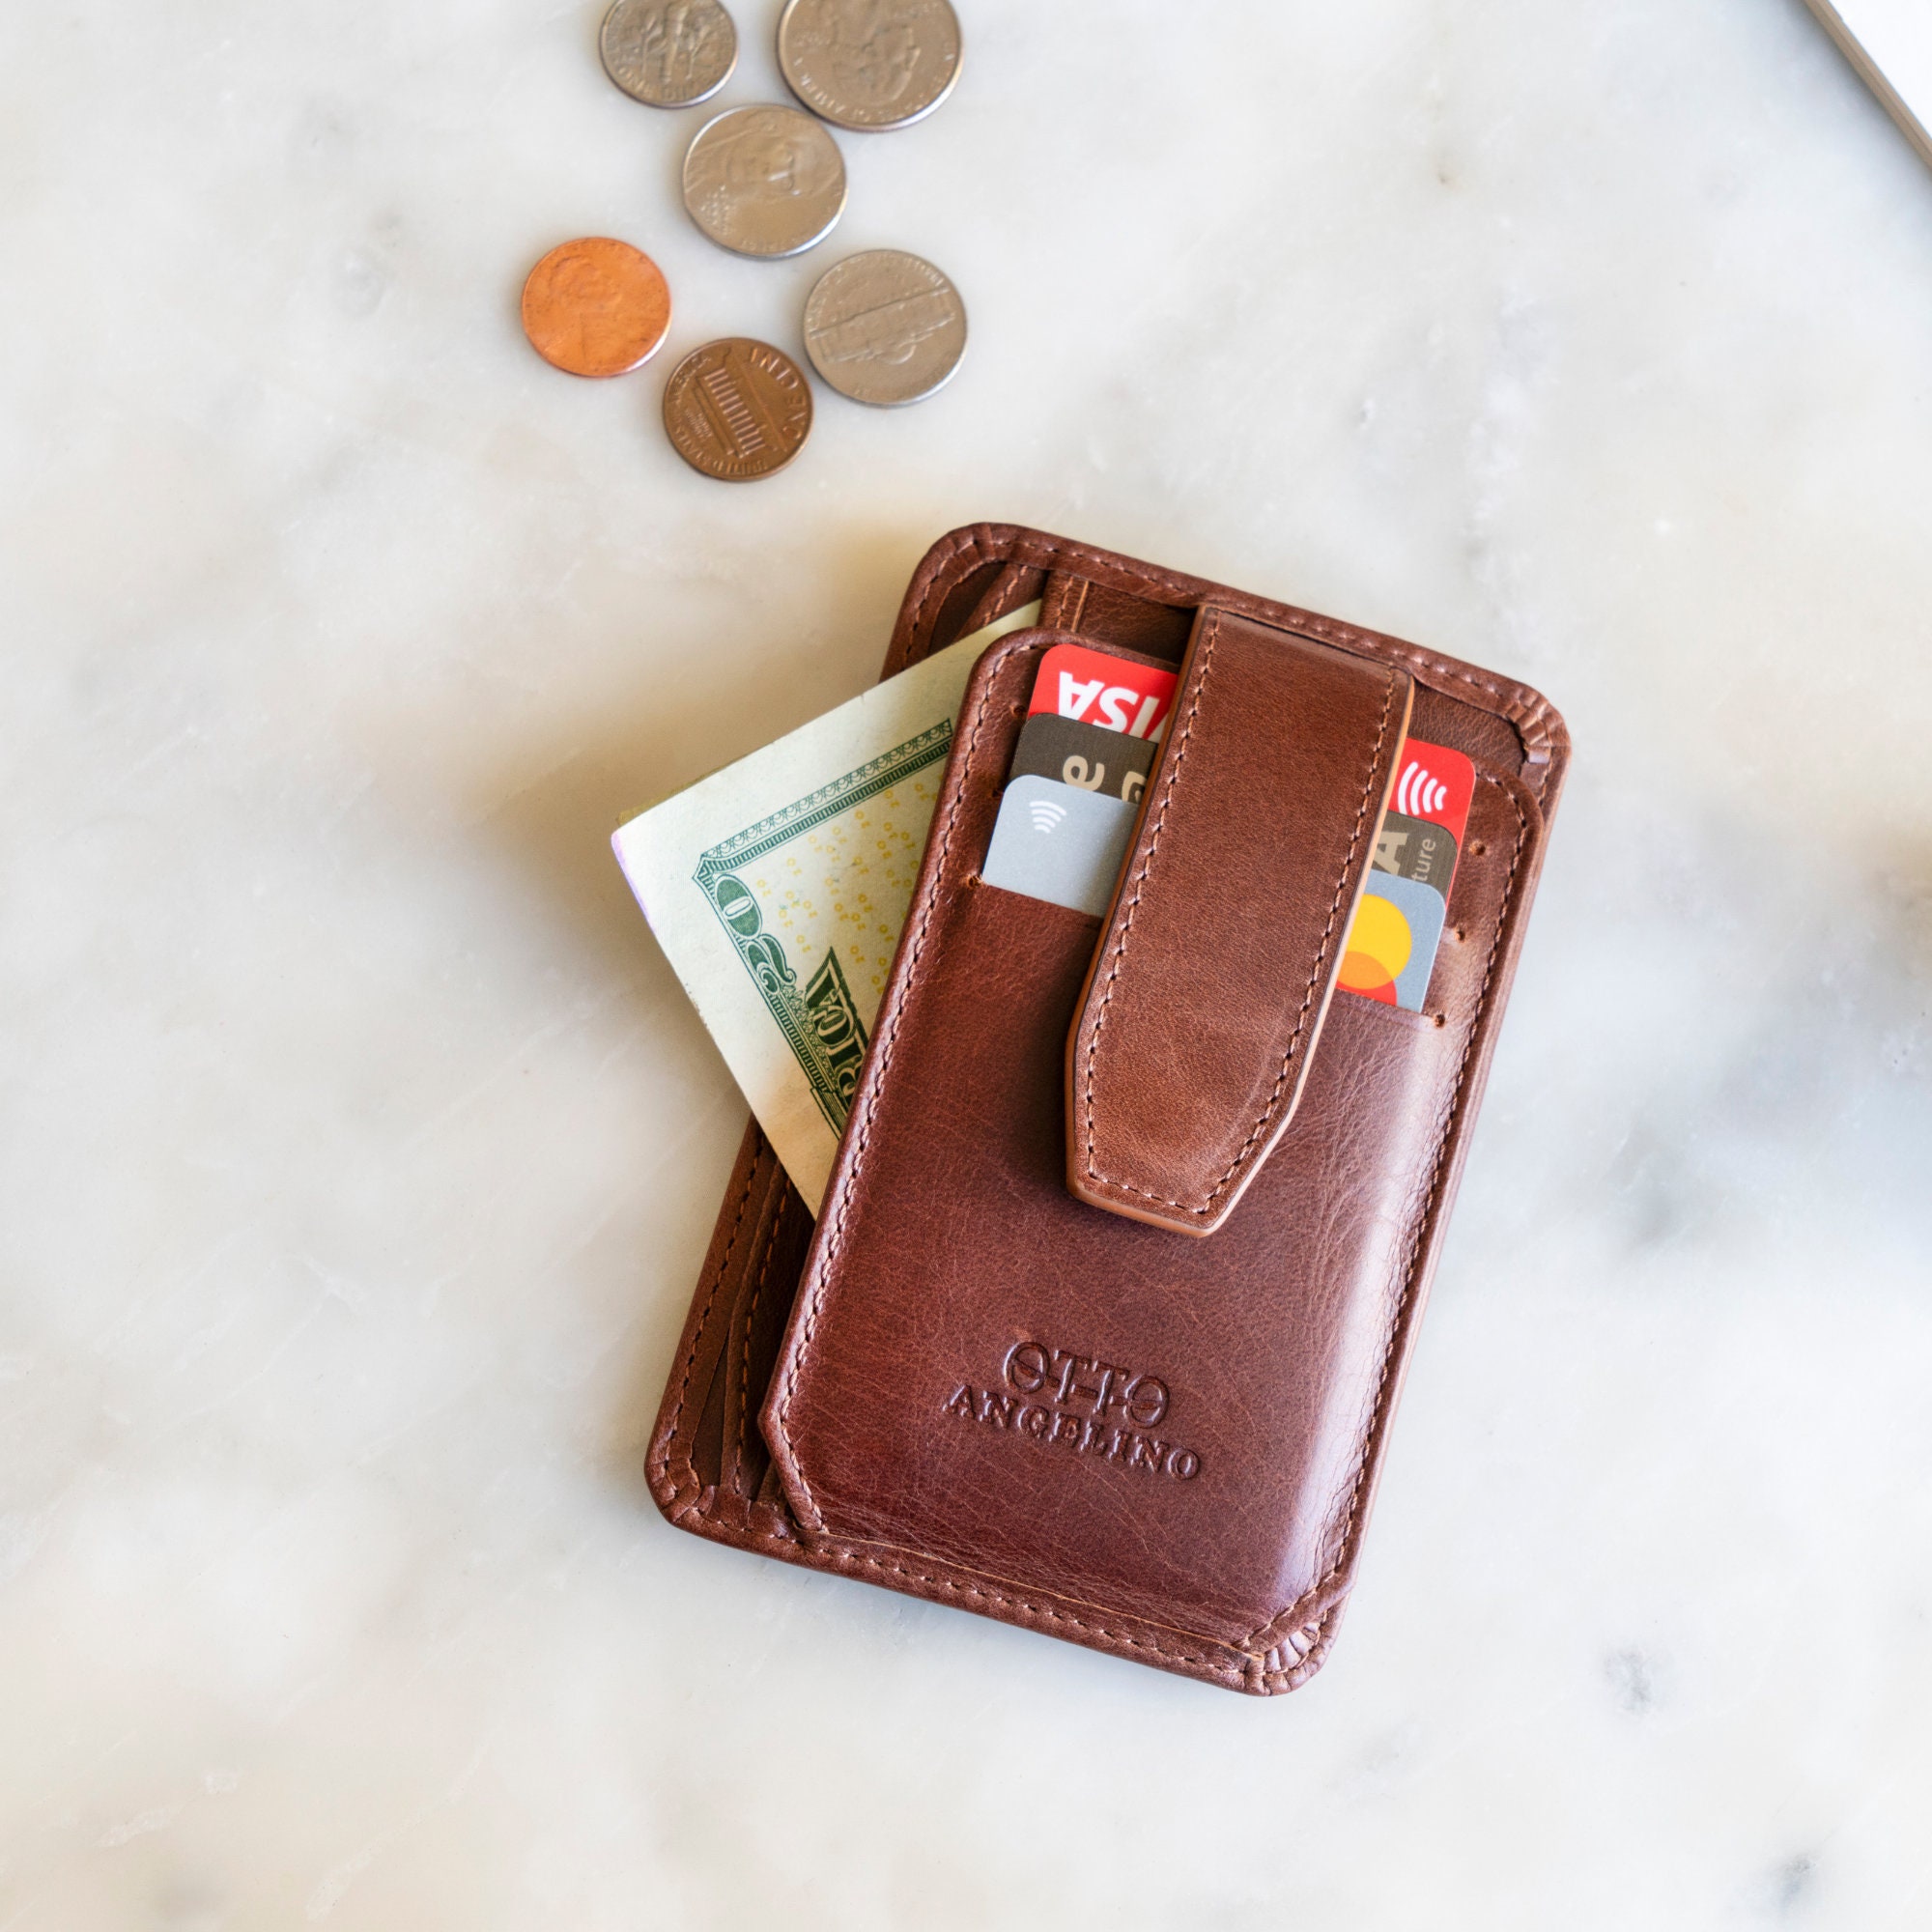 Leica Passport Kit w/ Leather Wallet, Coin, Service + Passport Cards